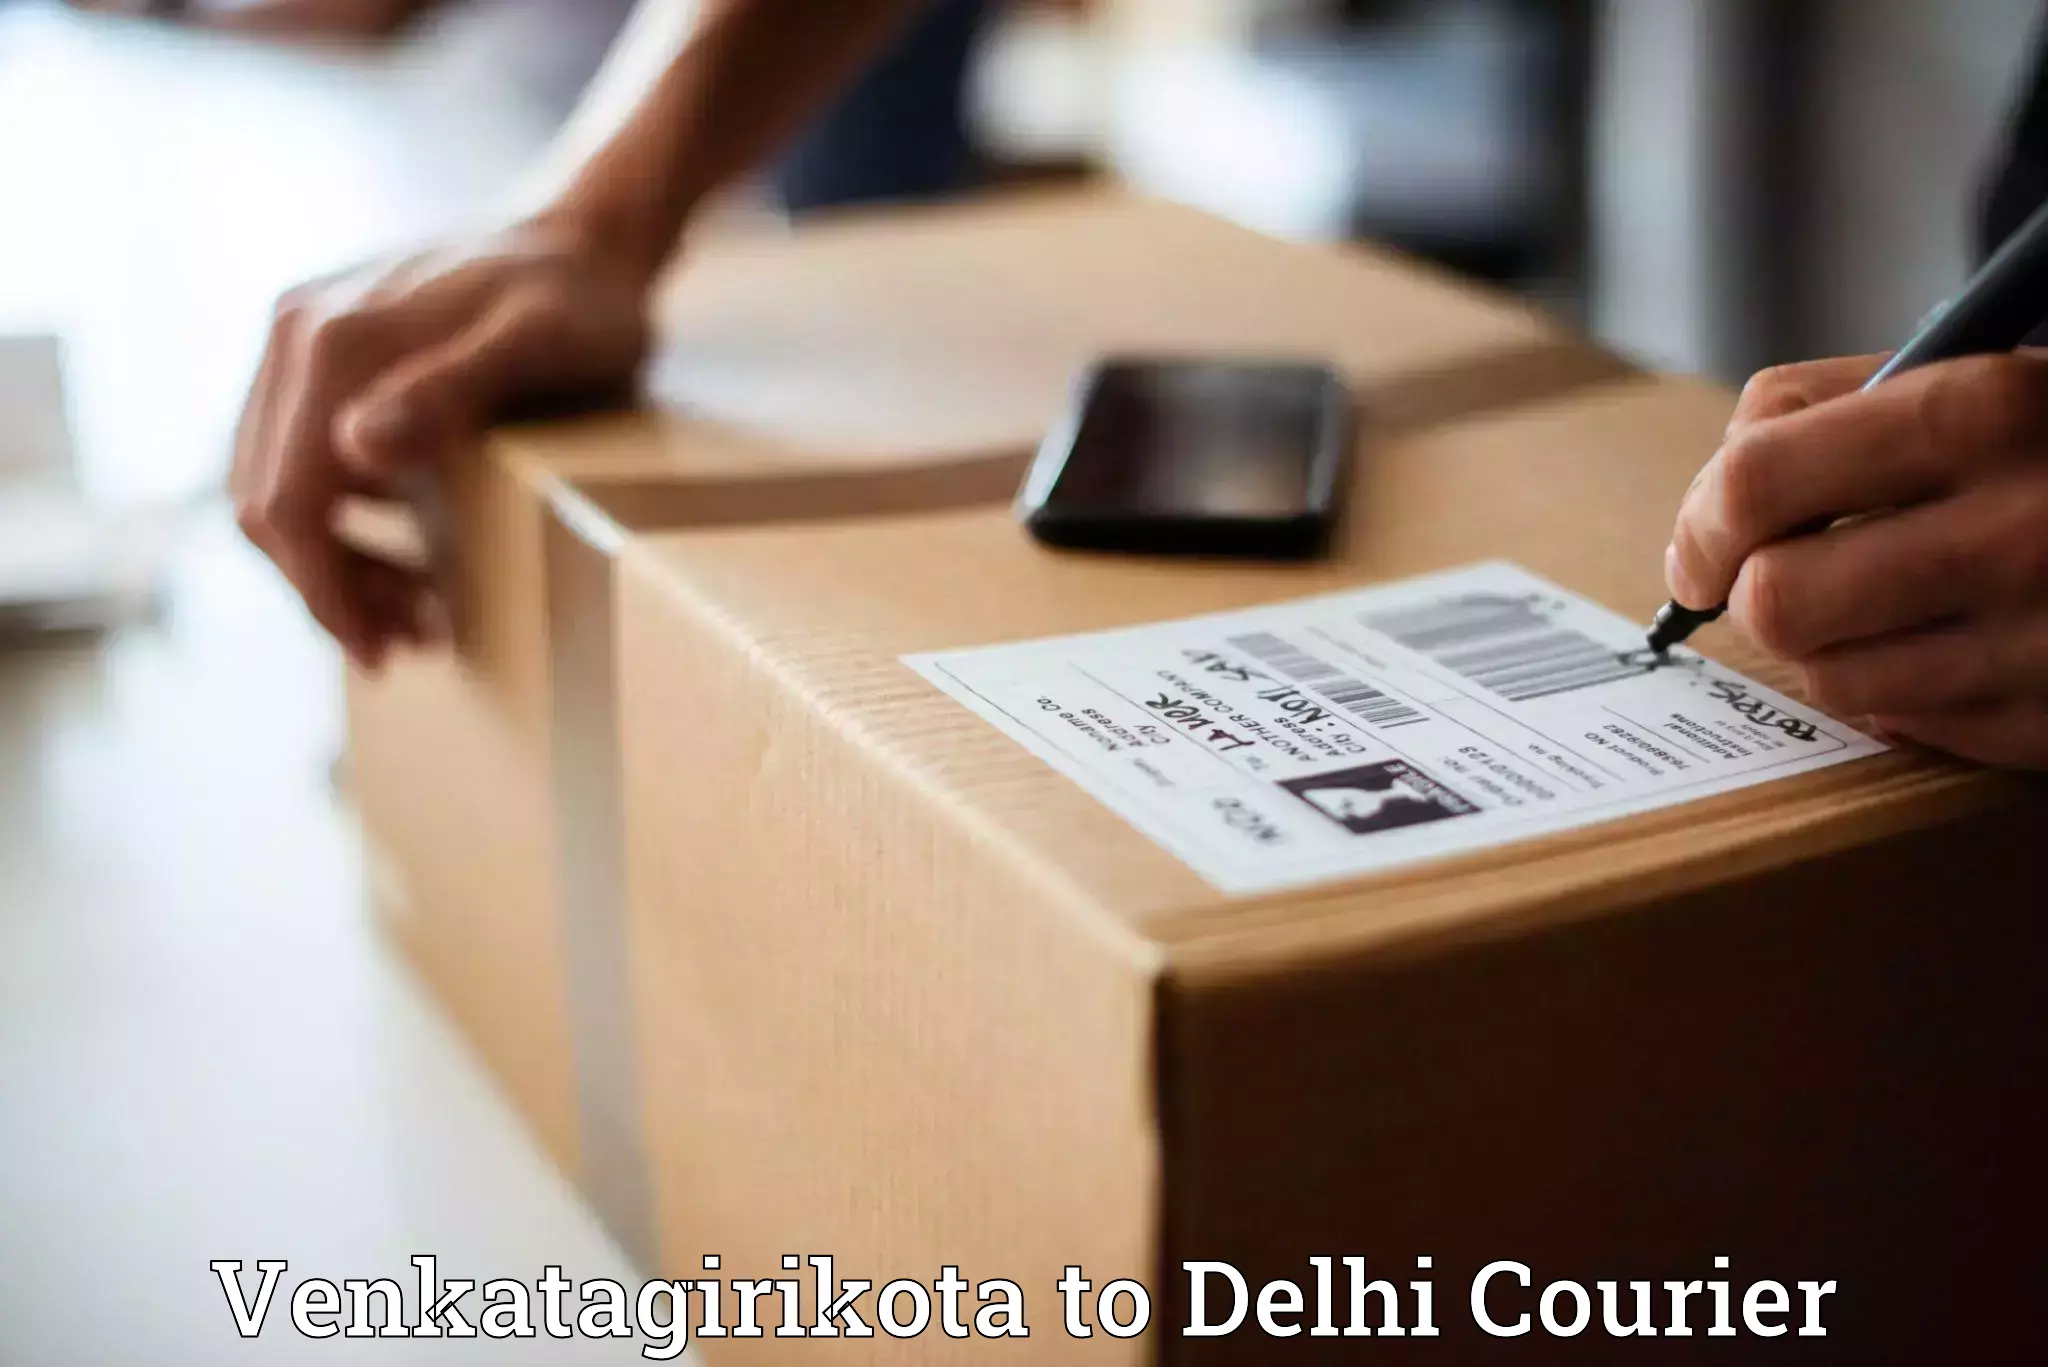 Express courier capabilities Venkatagirikota to Delhi